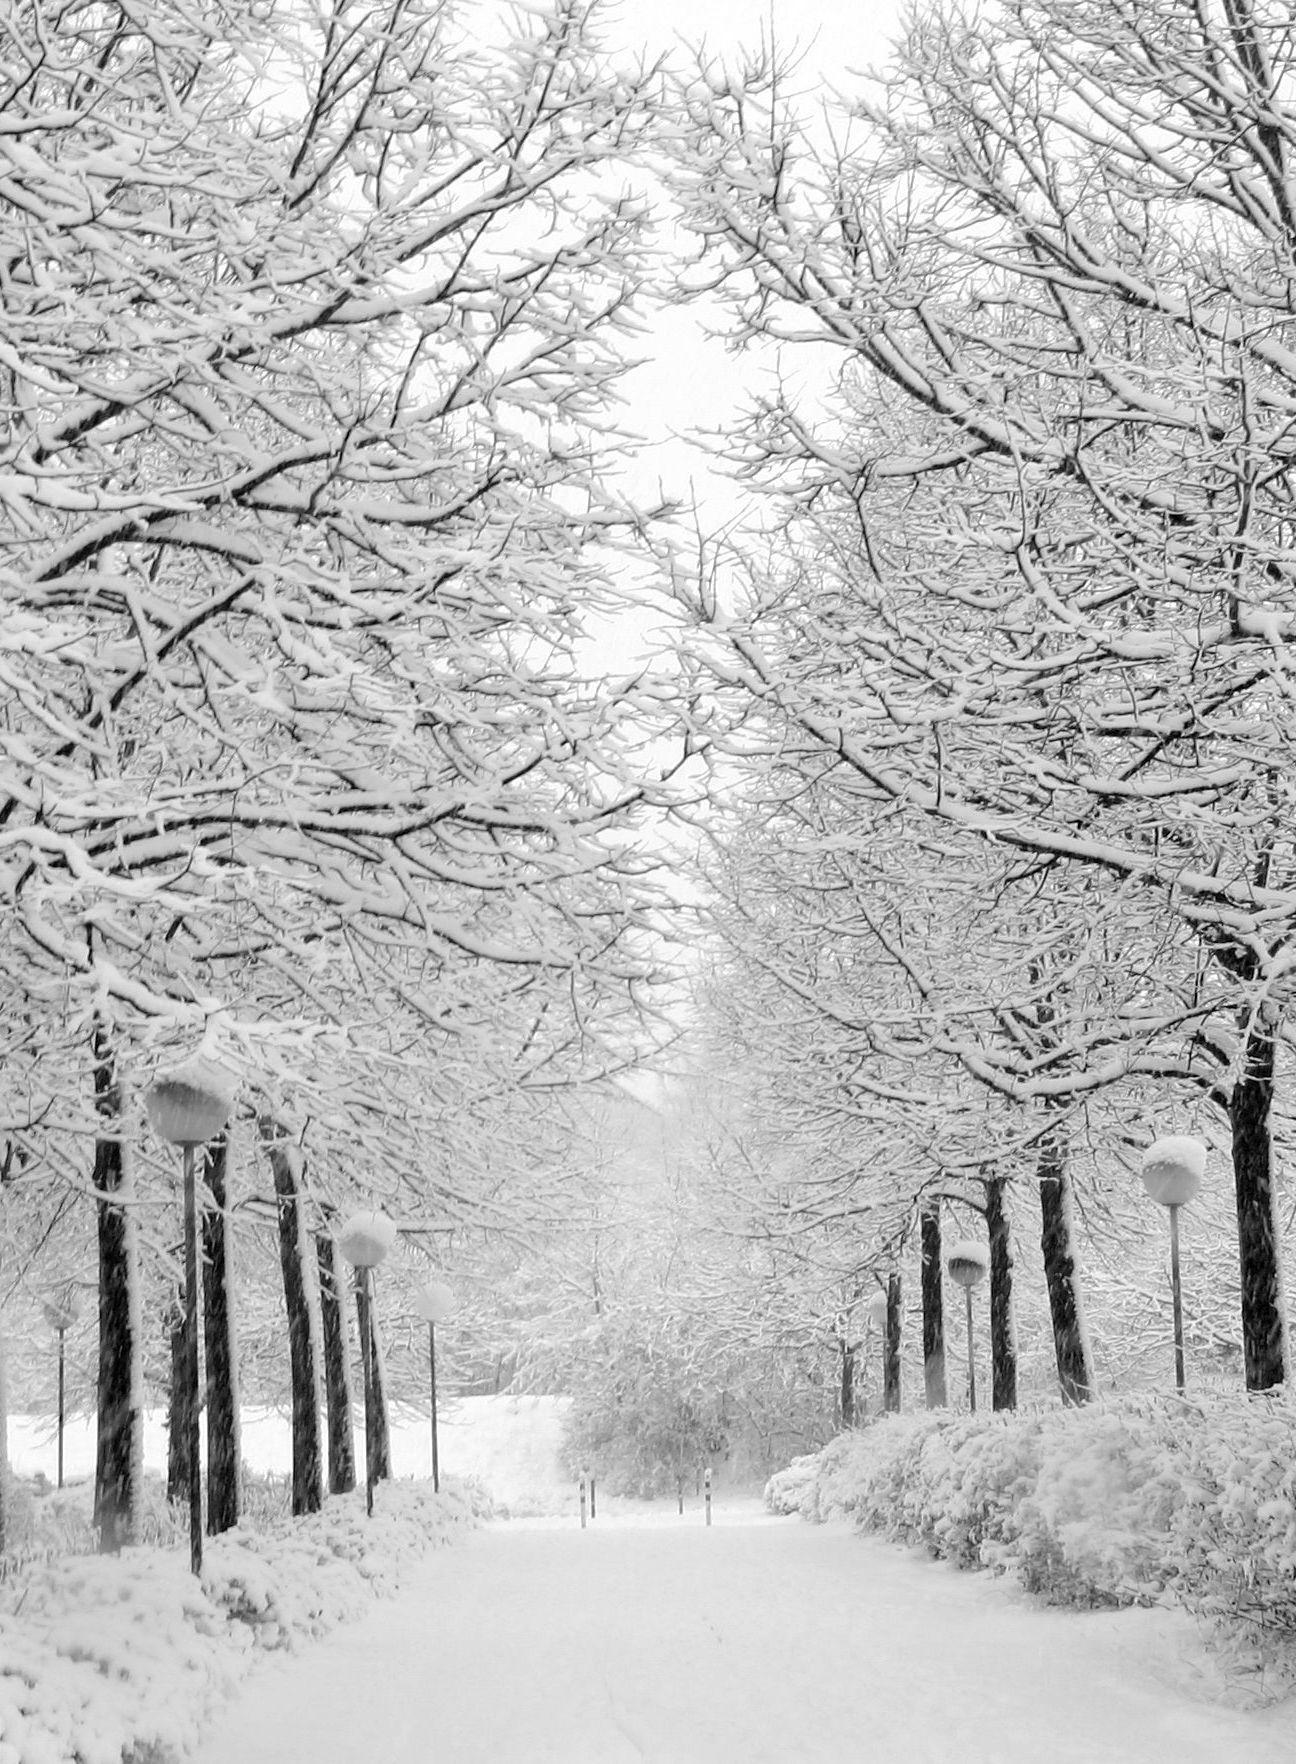 Seoul Beats Winter. Snow, trees, white beauty, road, photo